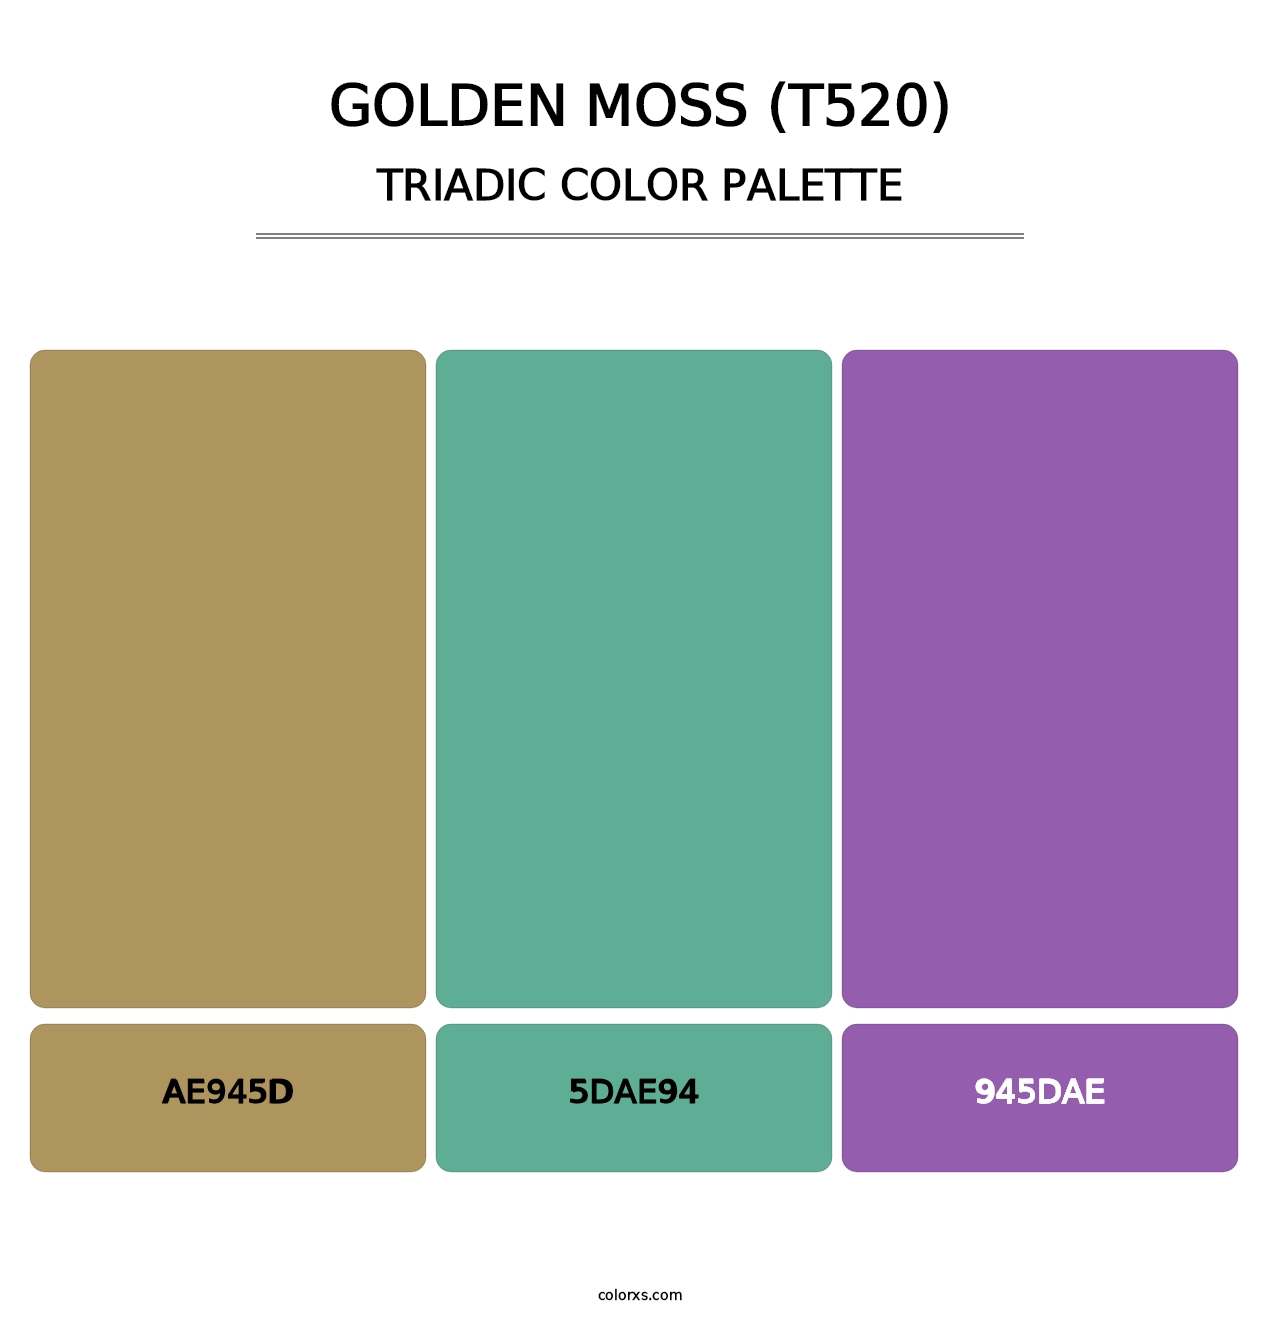 Golden Moss (T520) - Triadic Color Palette